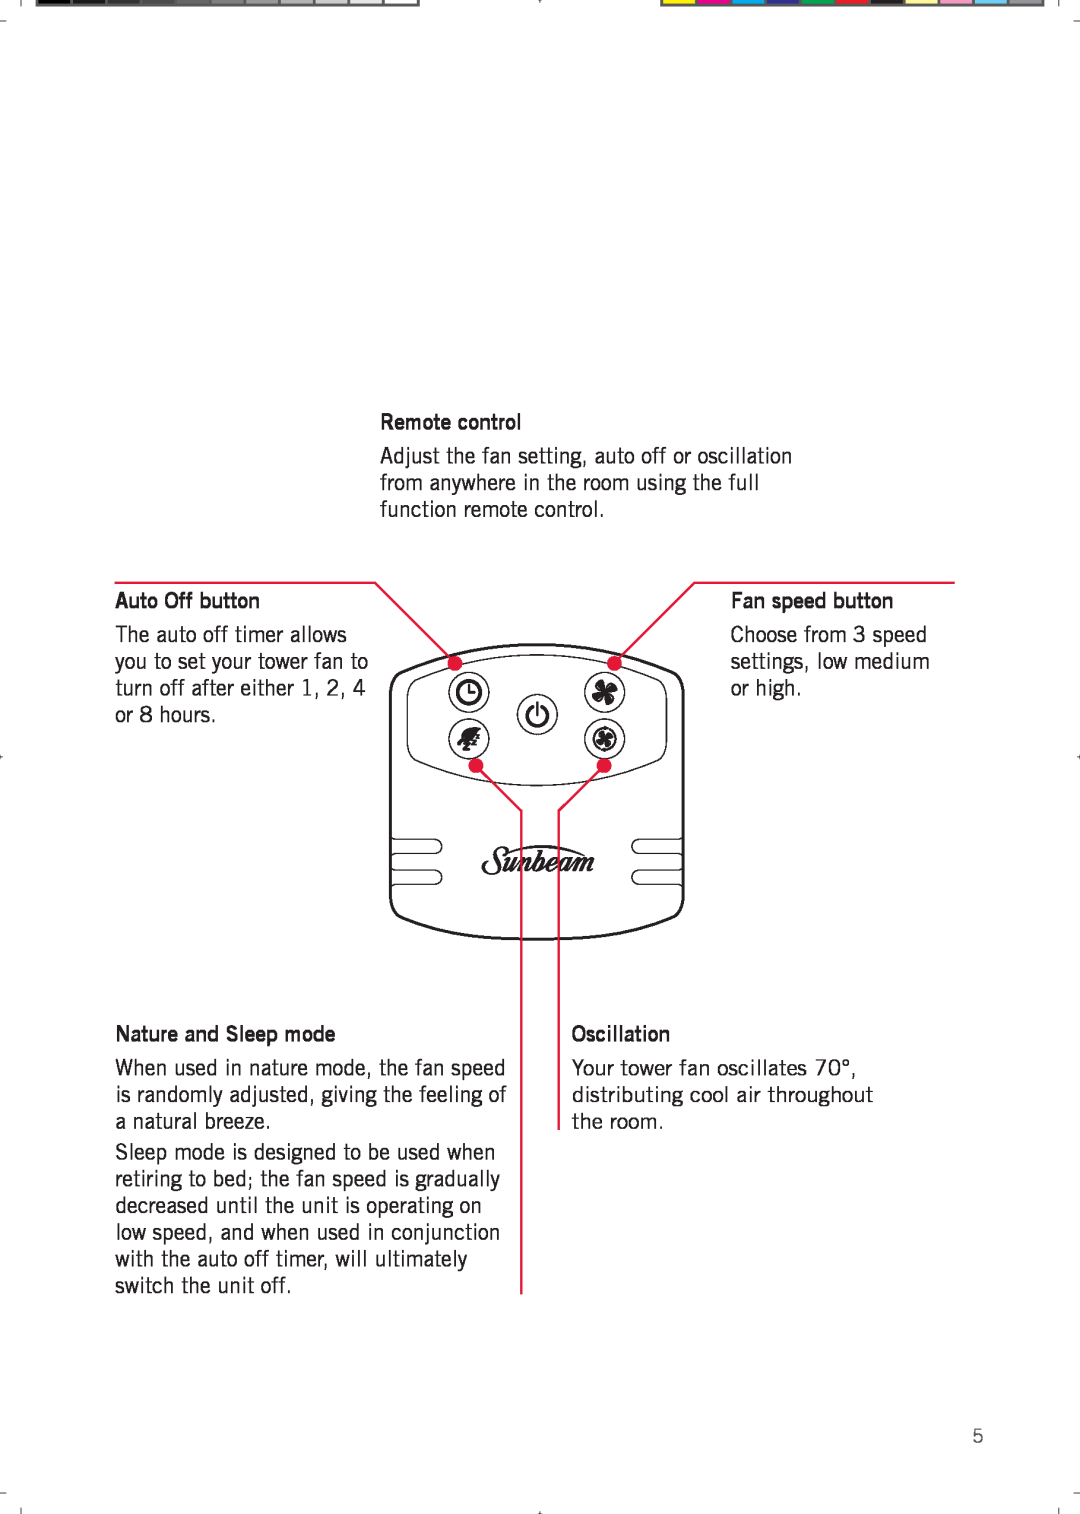 Sunbeam FA7200 manual Remote control, Auto Off button, Nature and Sleep mode, Oscillation 